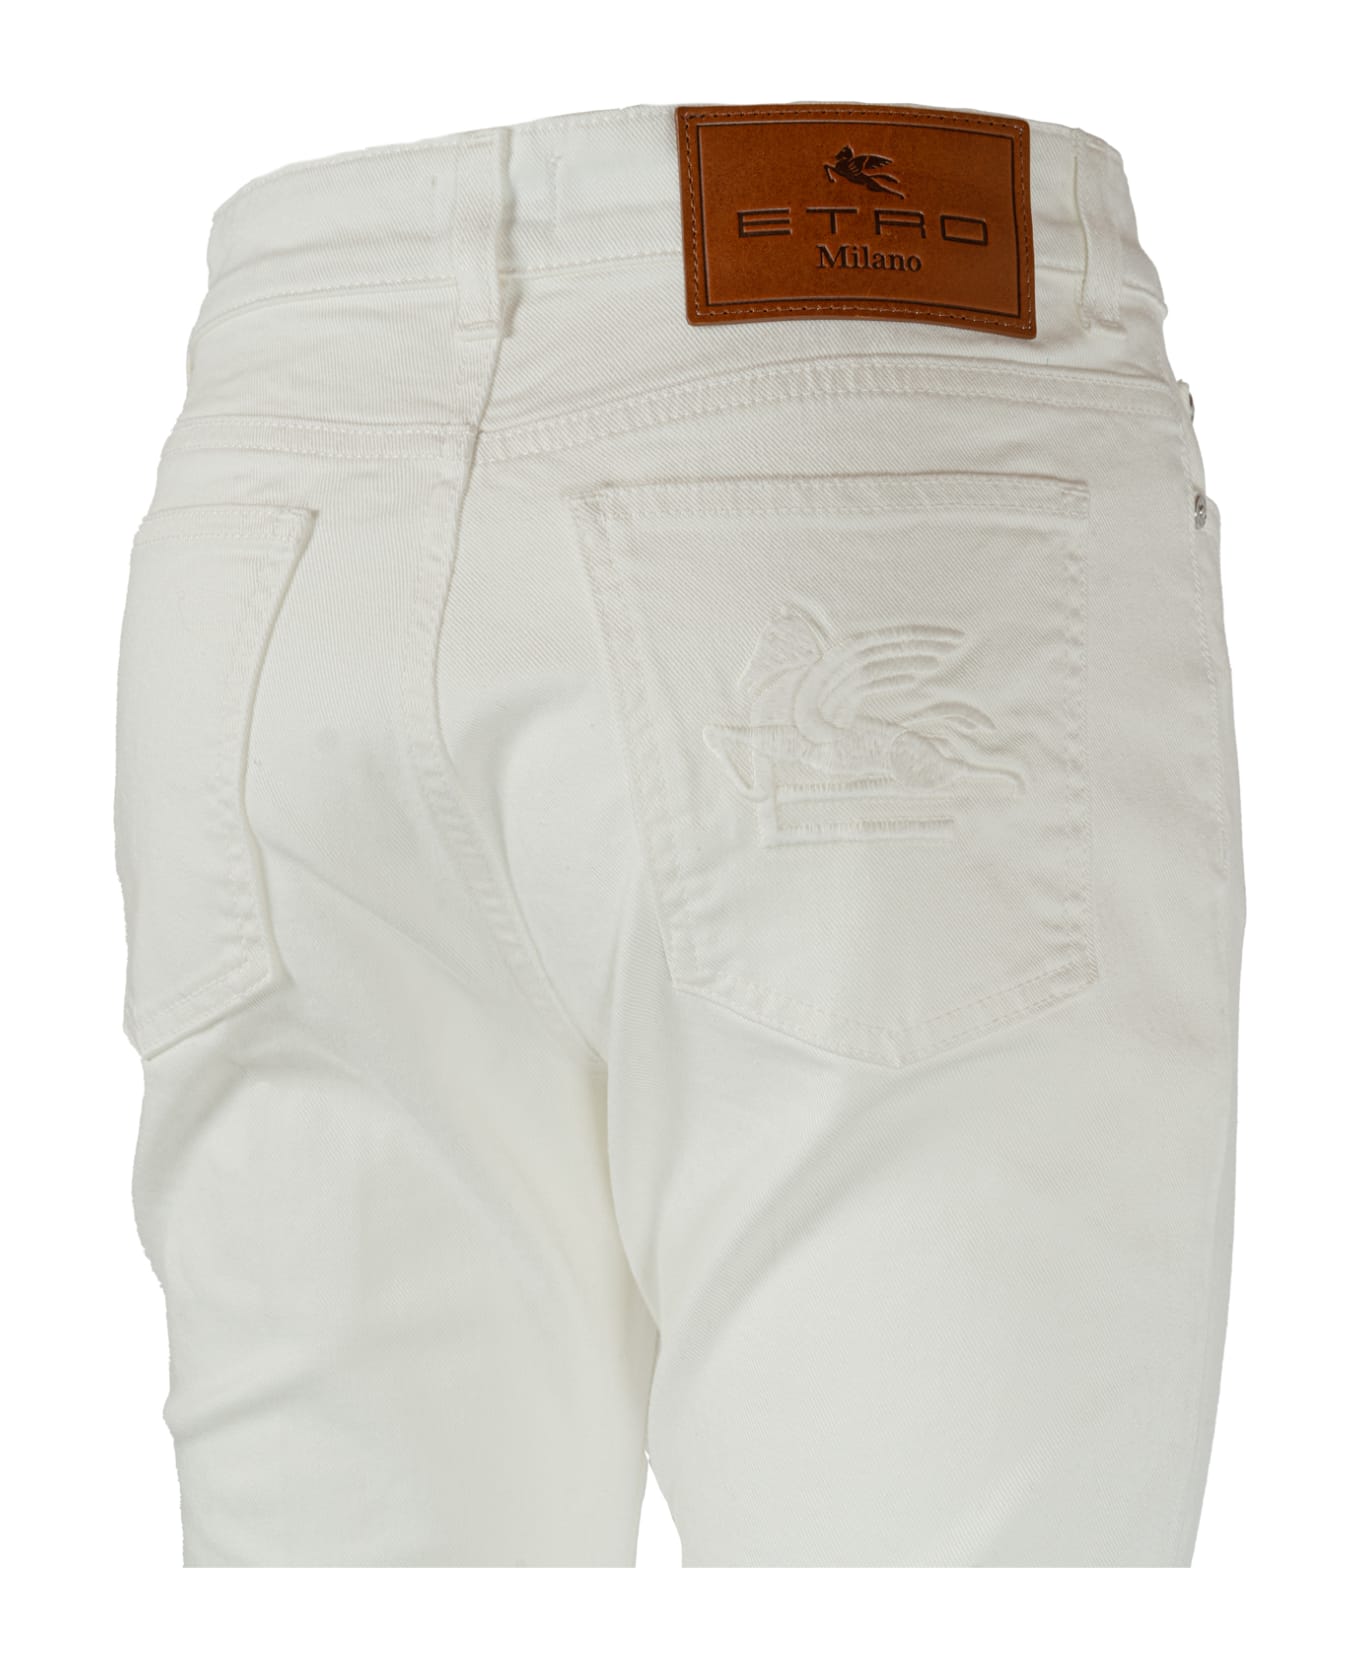 Etro White jeans | italist